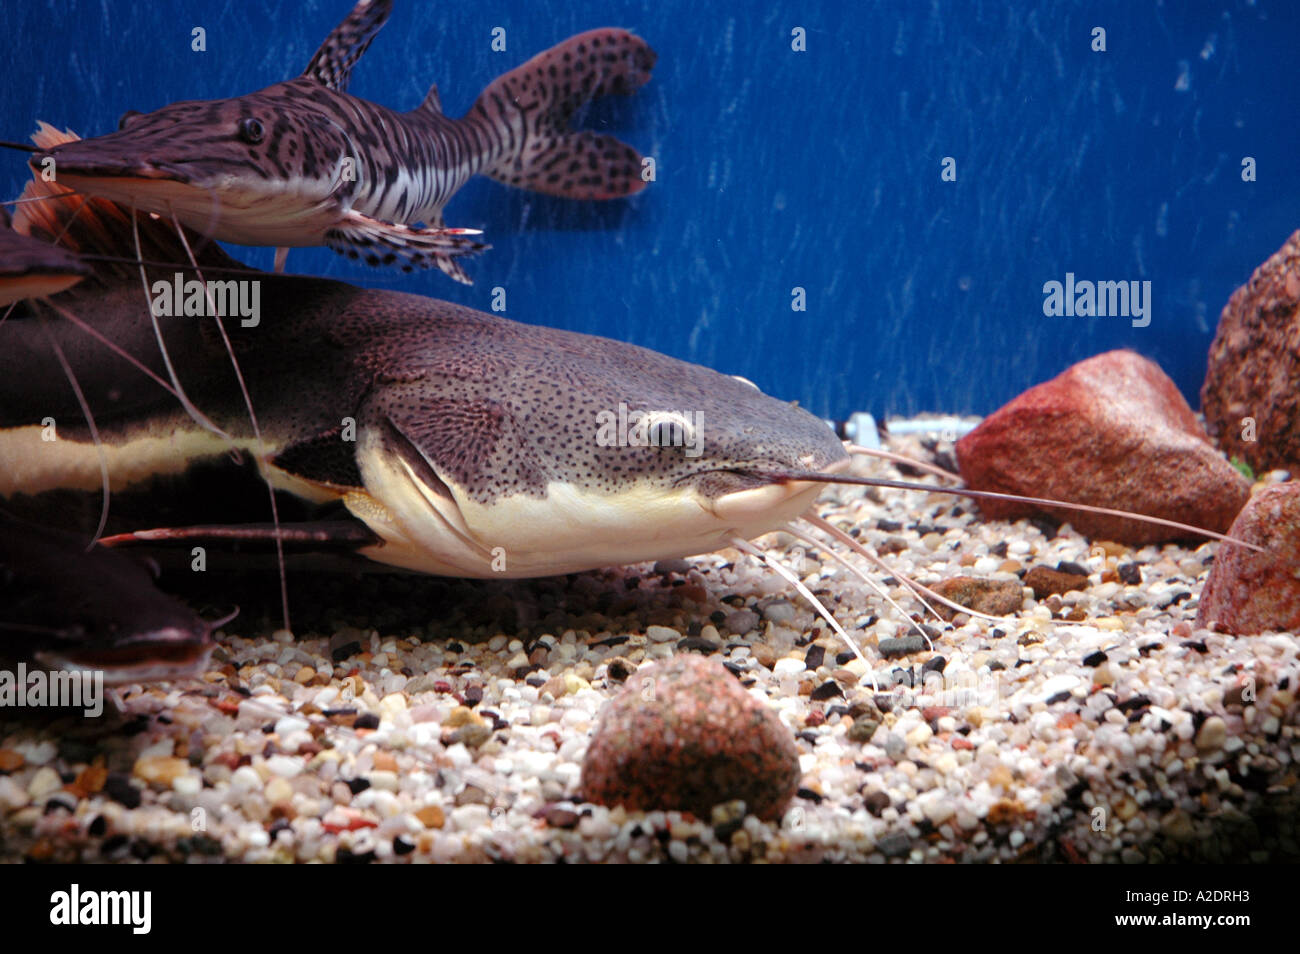 catfishes in aquarium Pseudoplatystoma fasciatum Tiger Shovelnose and Phractocephalus hemioliopterus Red-tailed catfish Stock Photo